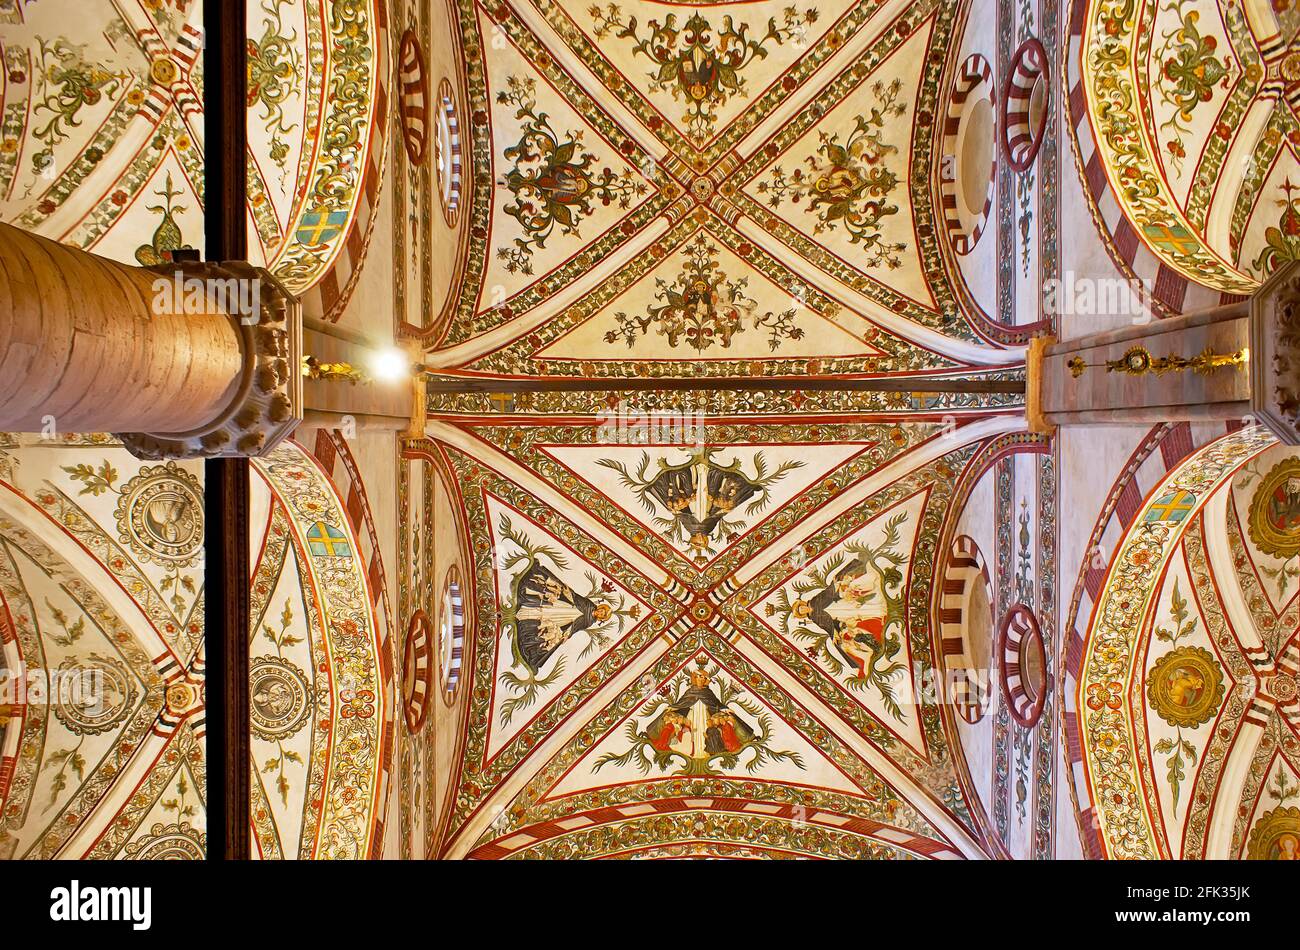 VERONA, ITALY - APRIL 23, 2012:  Basilica of Santa Anastasia boasts impressive frescoes on the vault with floral patterns and portraits of the Saints, Stock Photo